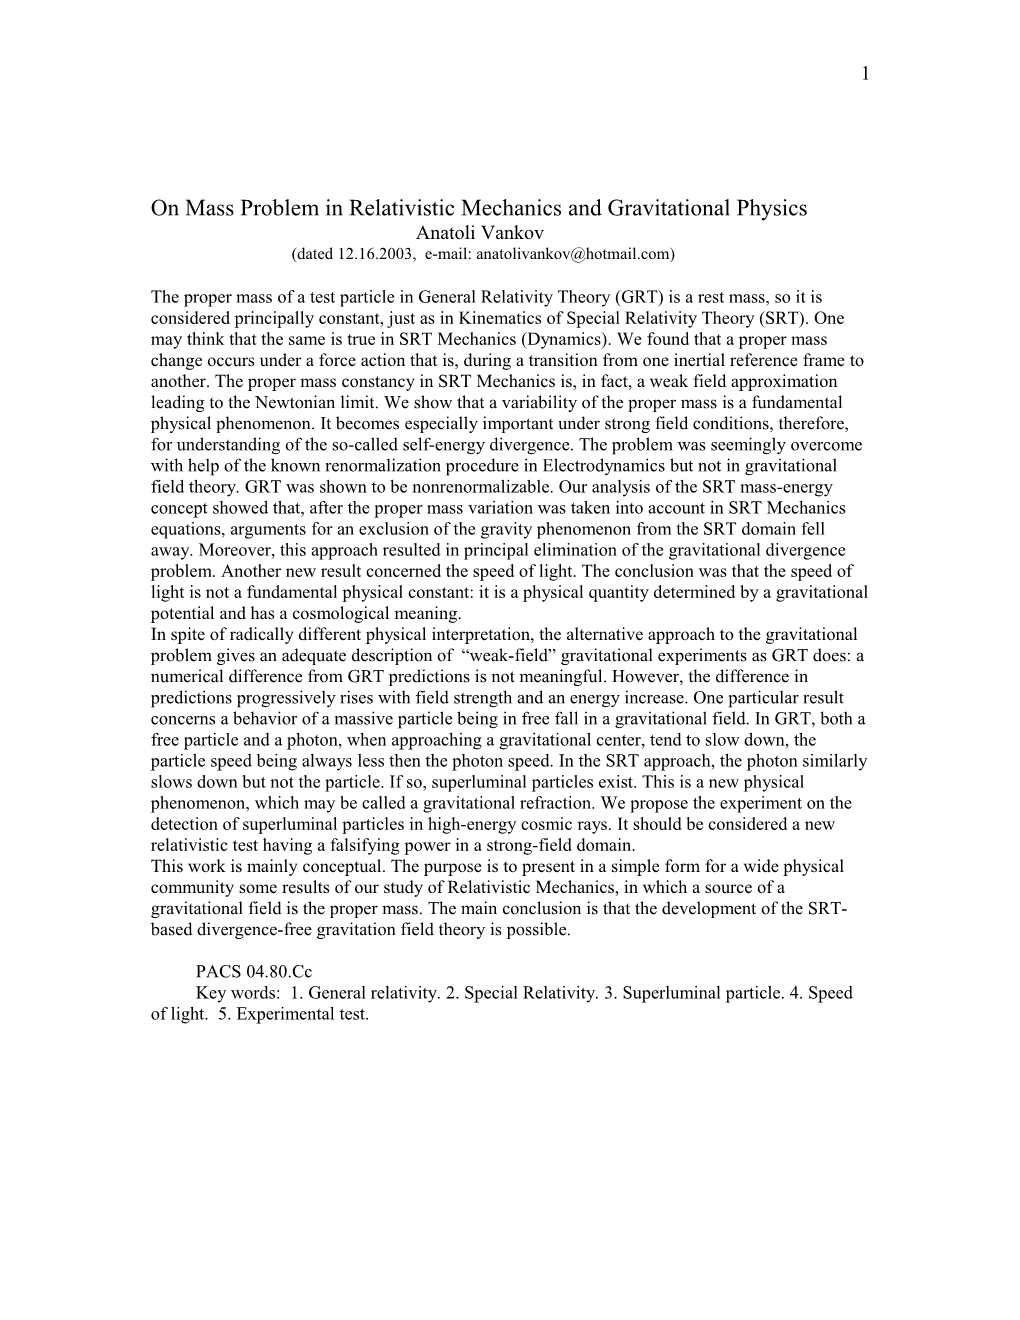 On Mass Problem in Relativistic Mechanics and Gravitational Physics